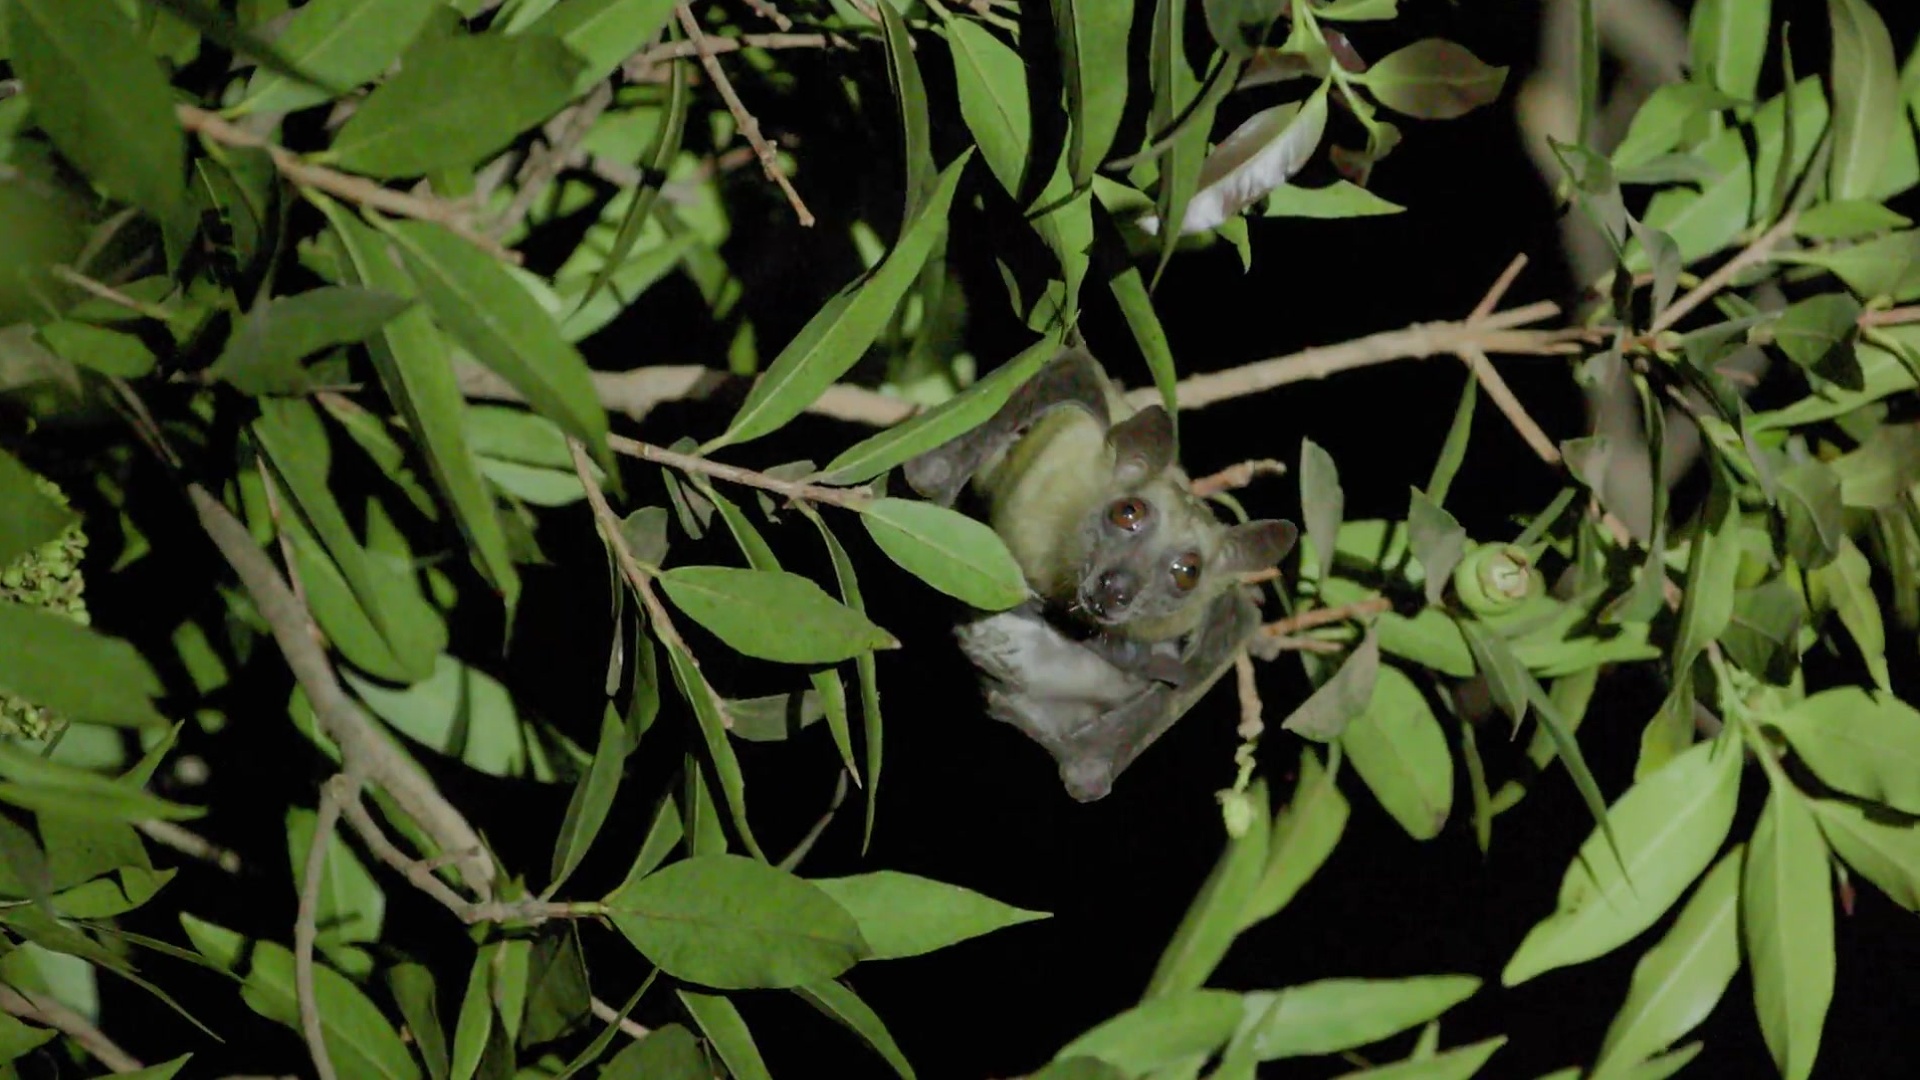 3. Bats of Malawi